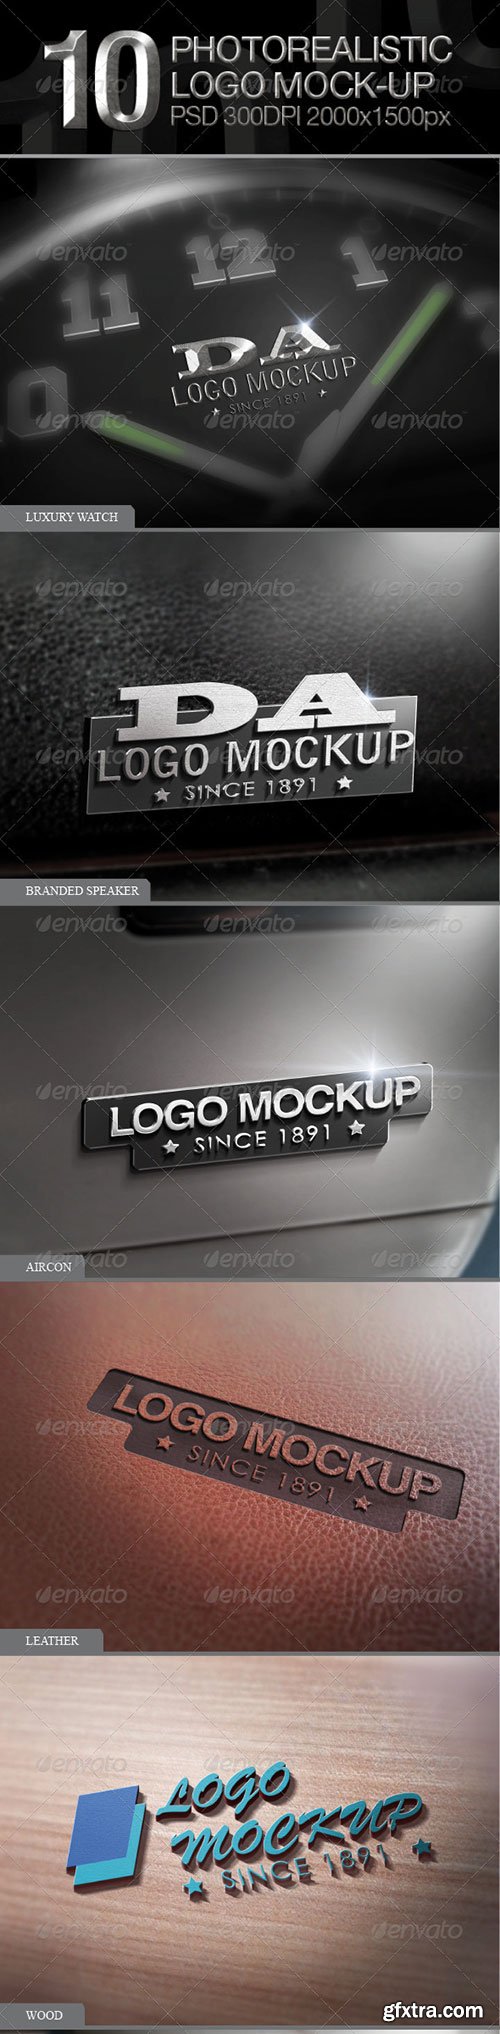 GraphicRiver - 10 Photorealistic Logo Mock-up